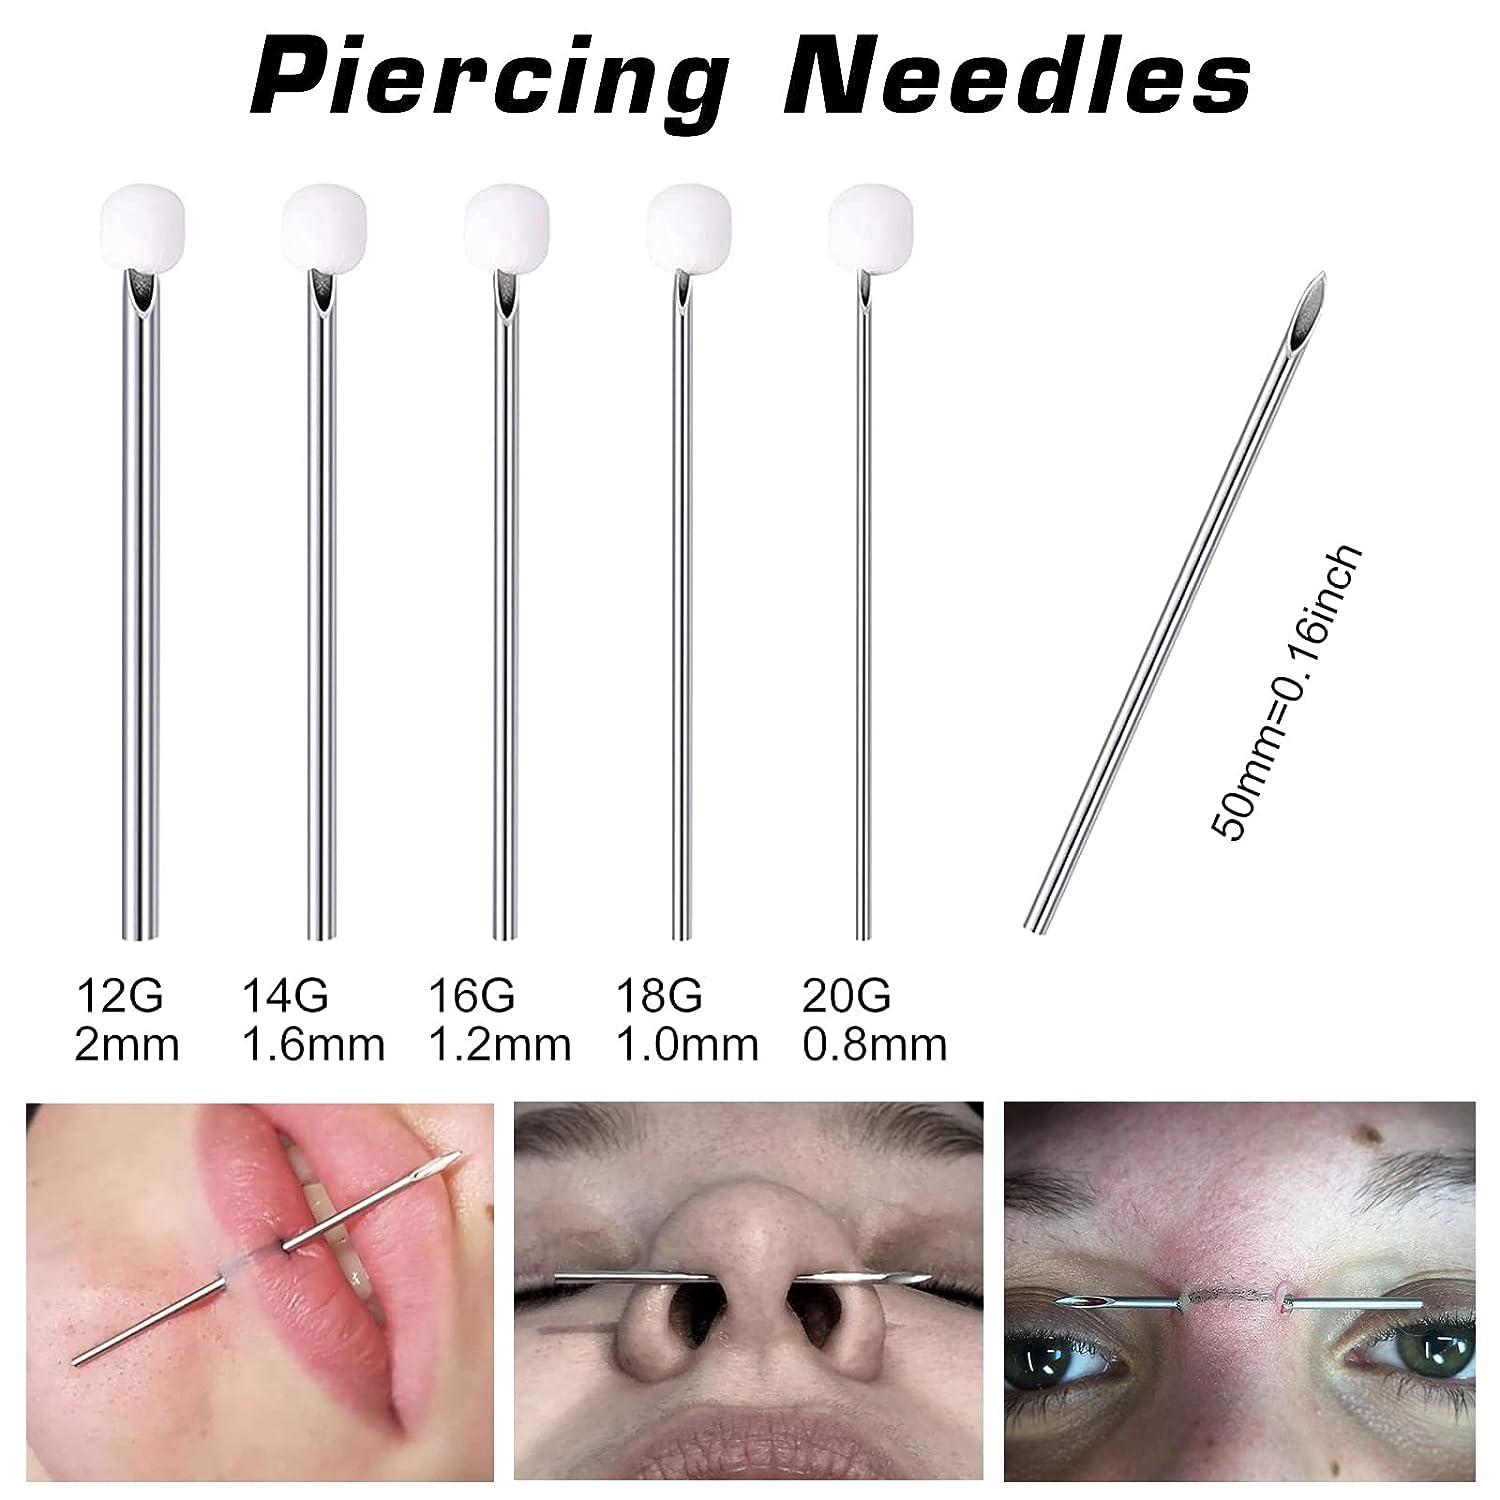 100 pcs Mixed Body Piercing Needle Sizes 12g, 14g, 16g, 18g & 20g